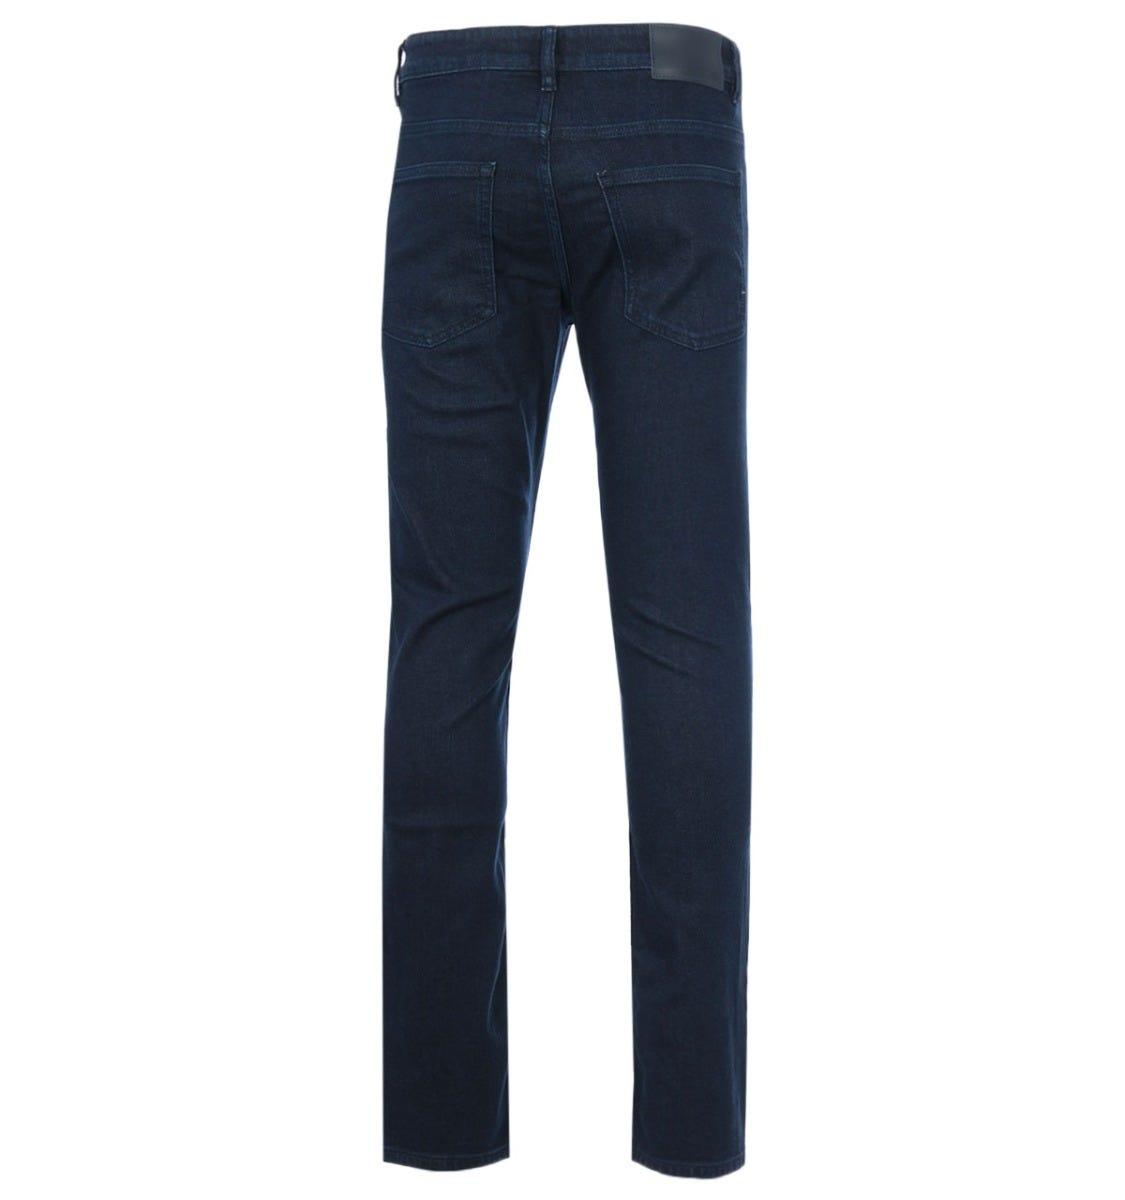 Hugo Boss Delaware BC-C Slim-fit Jeans in rinse-wash Indigo Stretch Denim 